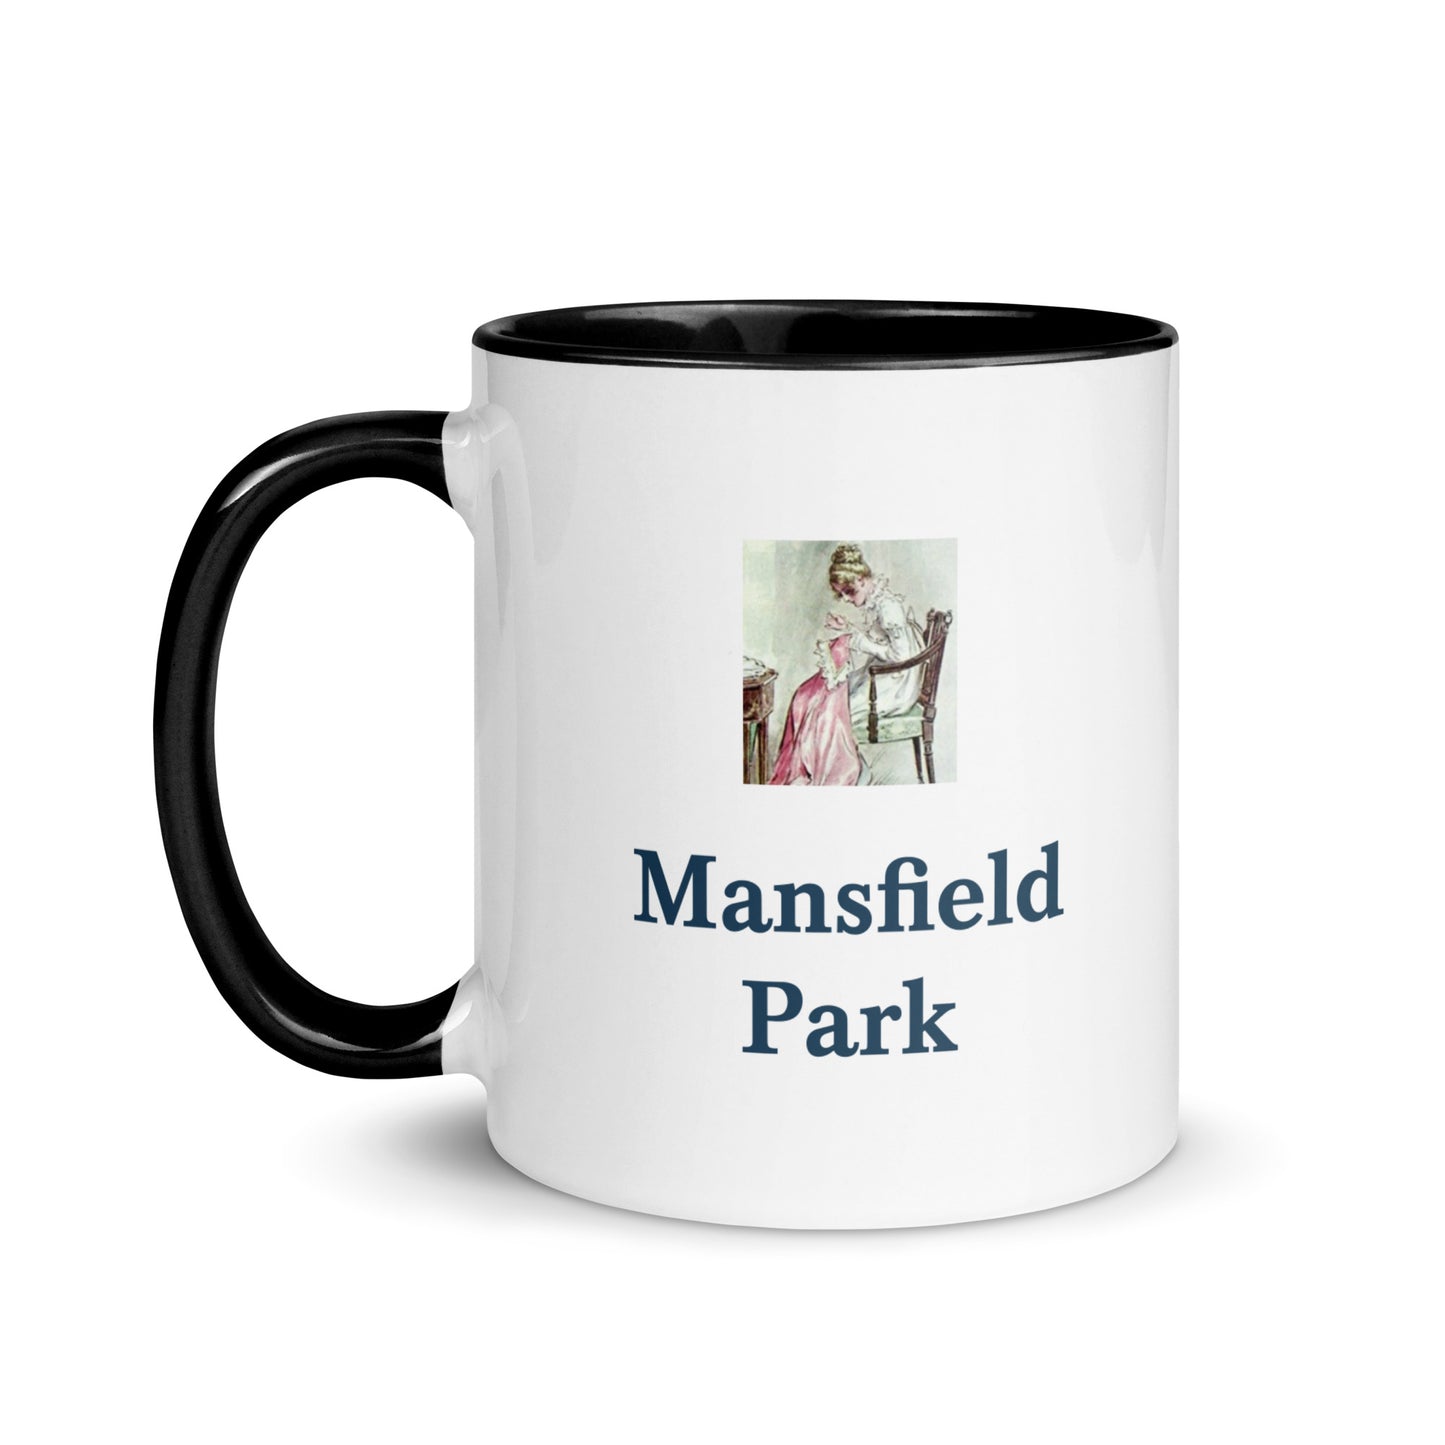 Mansfield Park mug with color inside